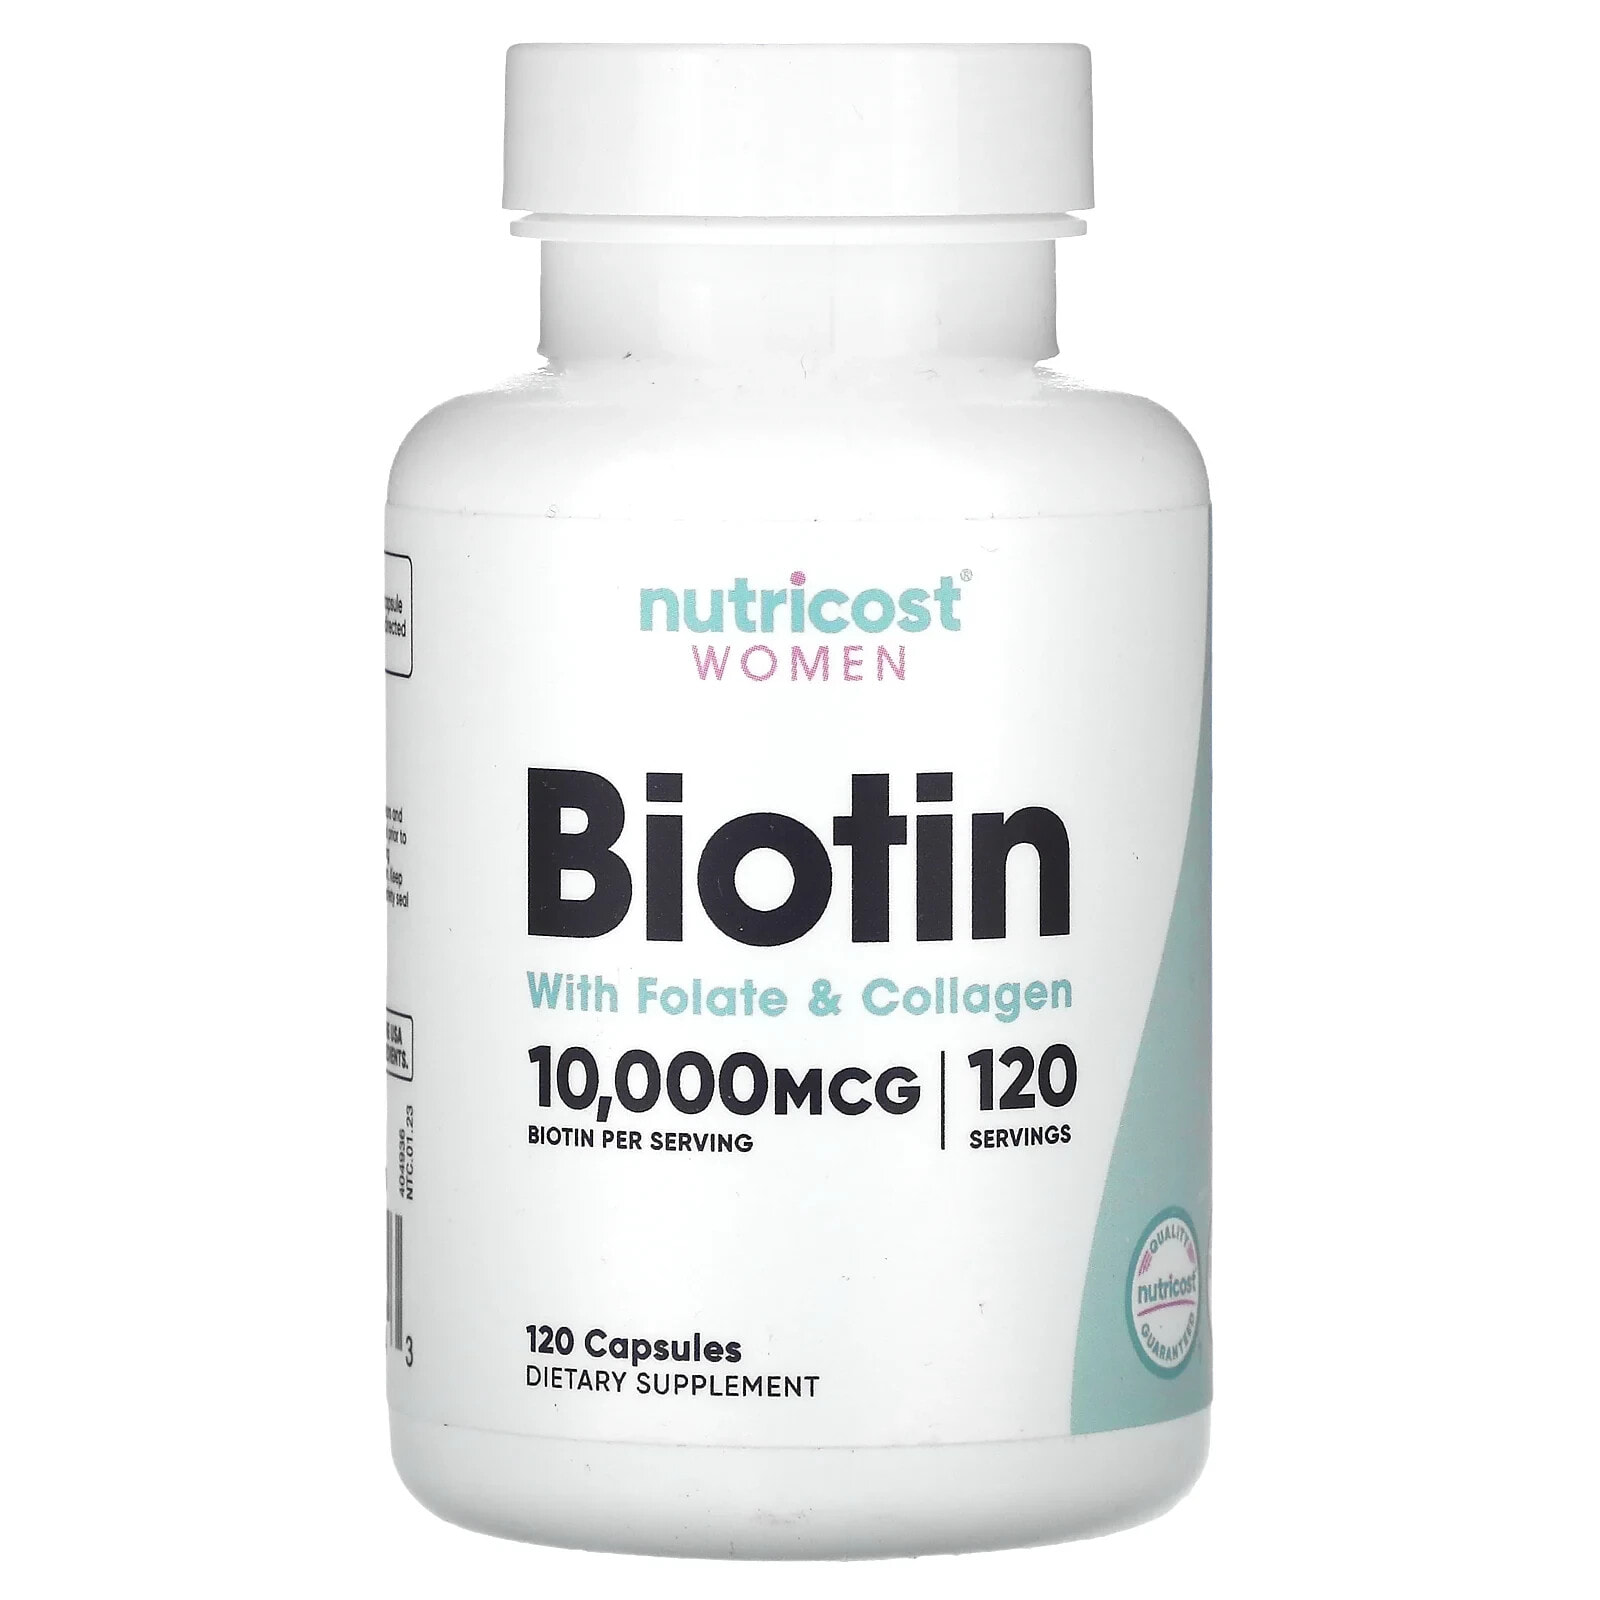 Women, Biotin With Folate & Collagen, 10,000 mcg, 120 Capsules